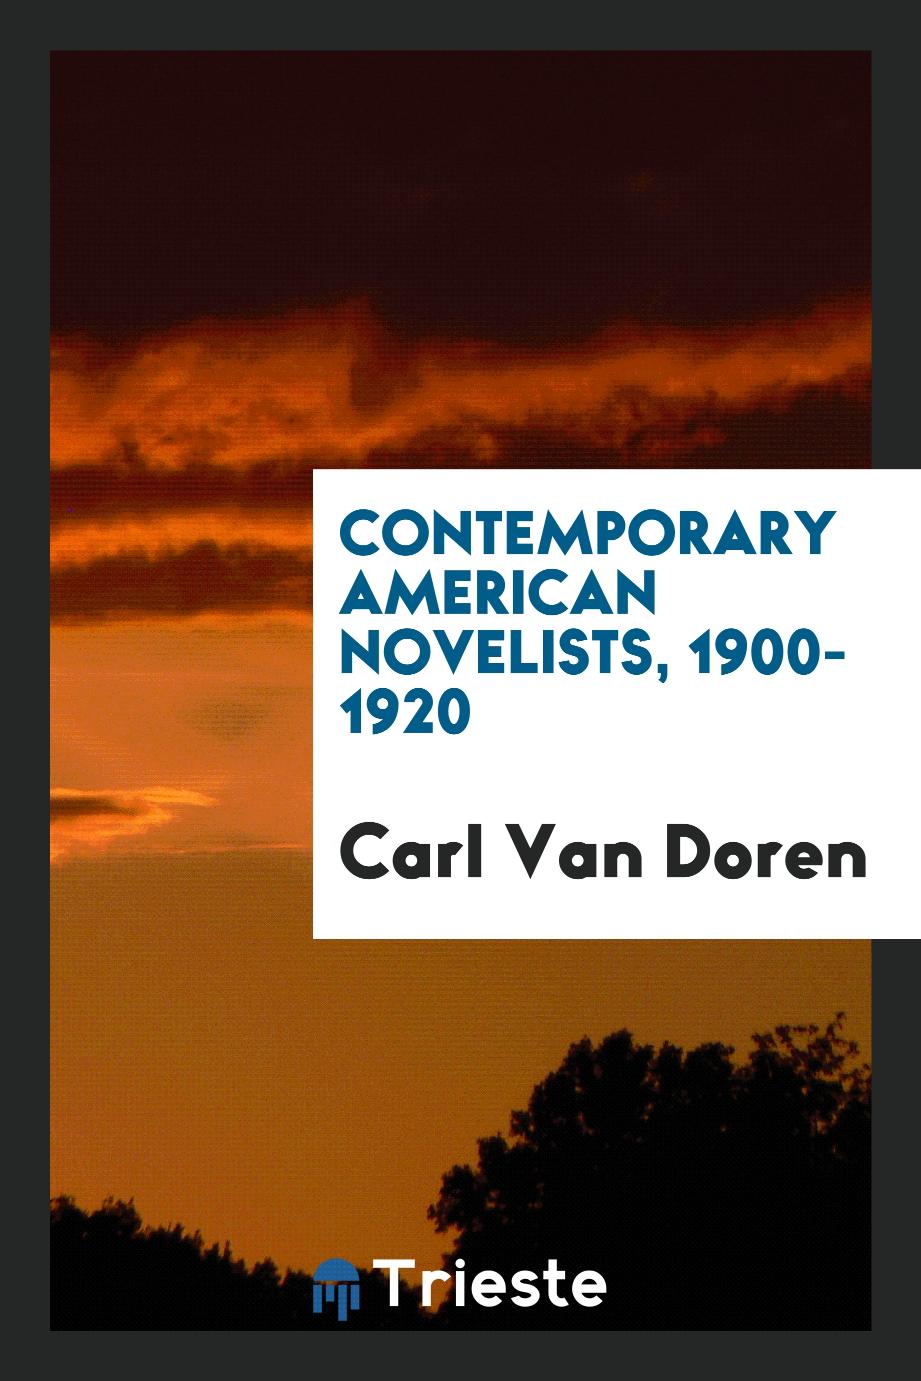 Contemporary American novelists, 1900-1920